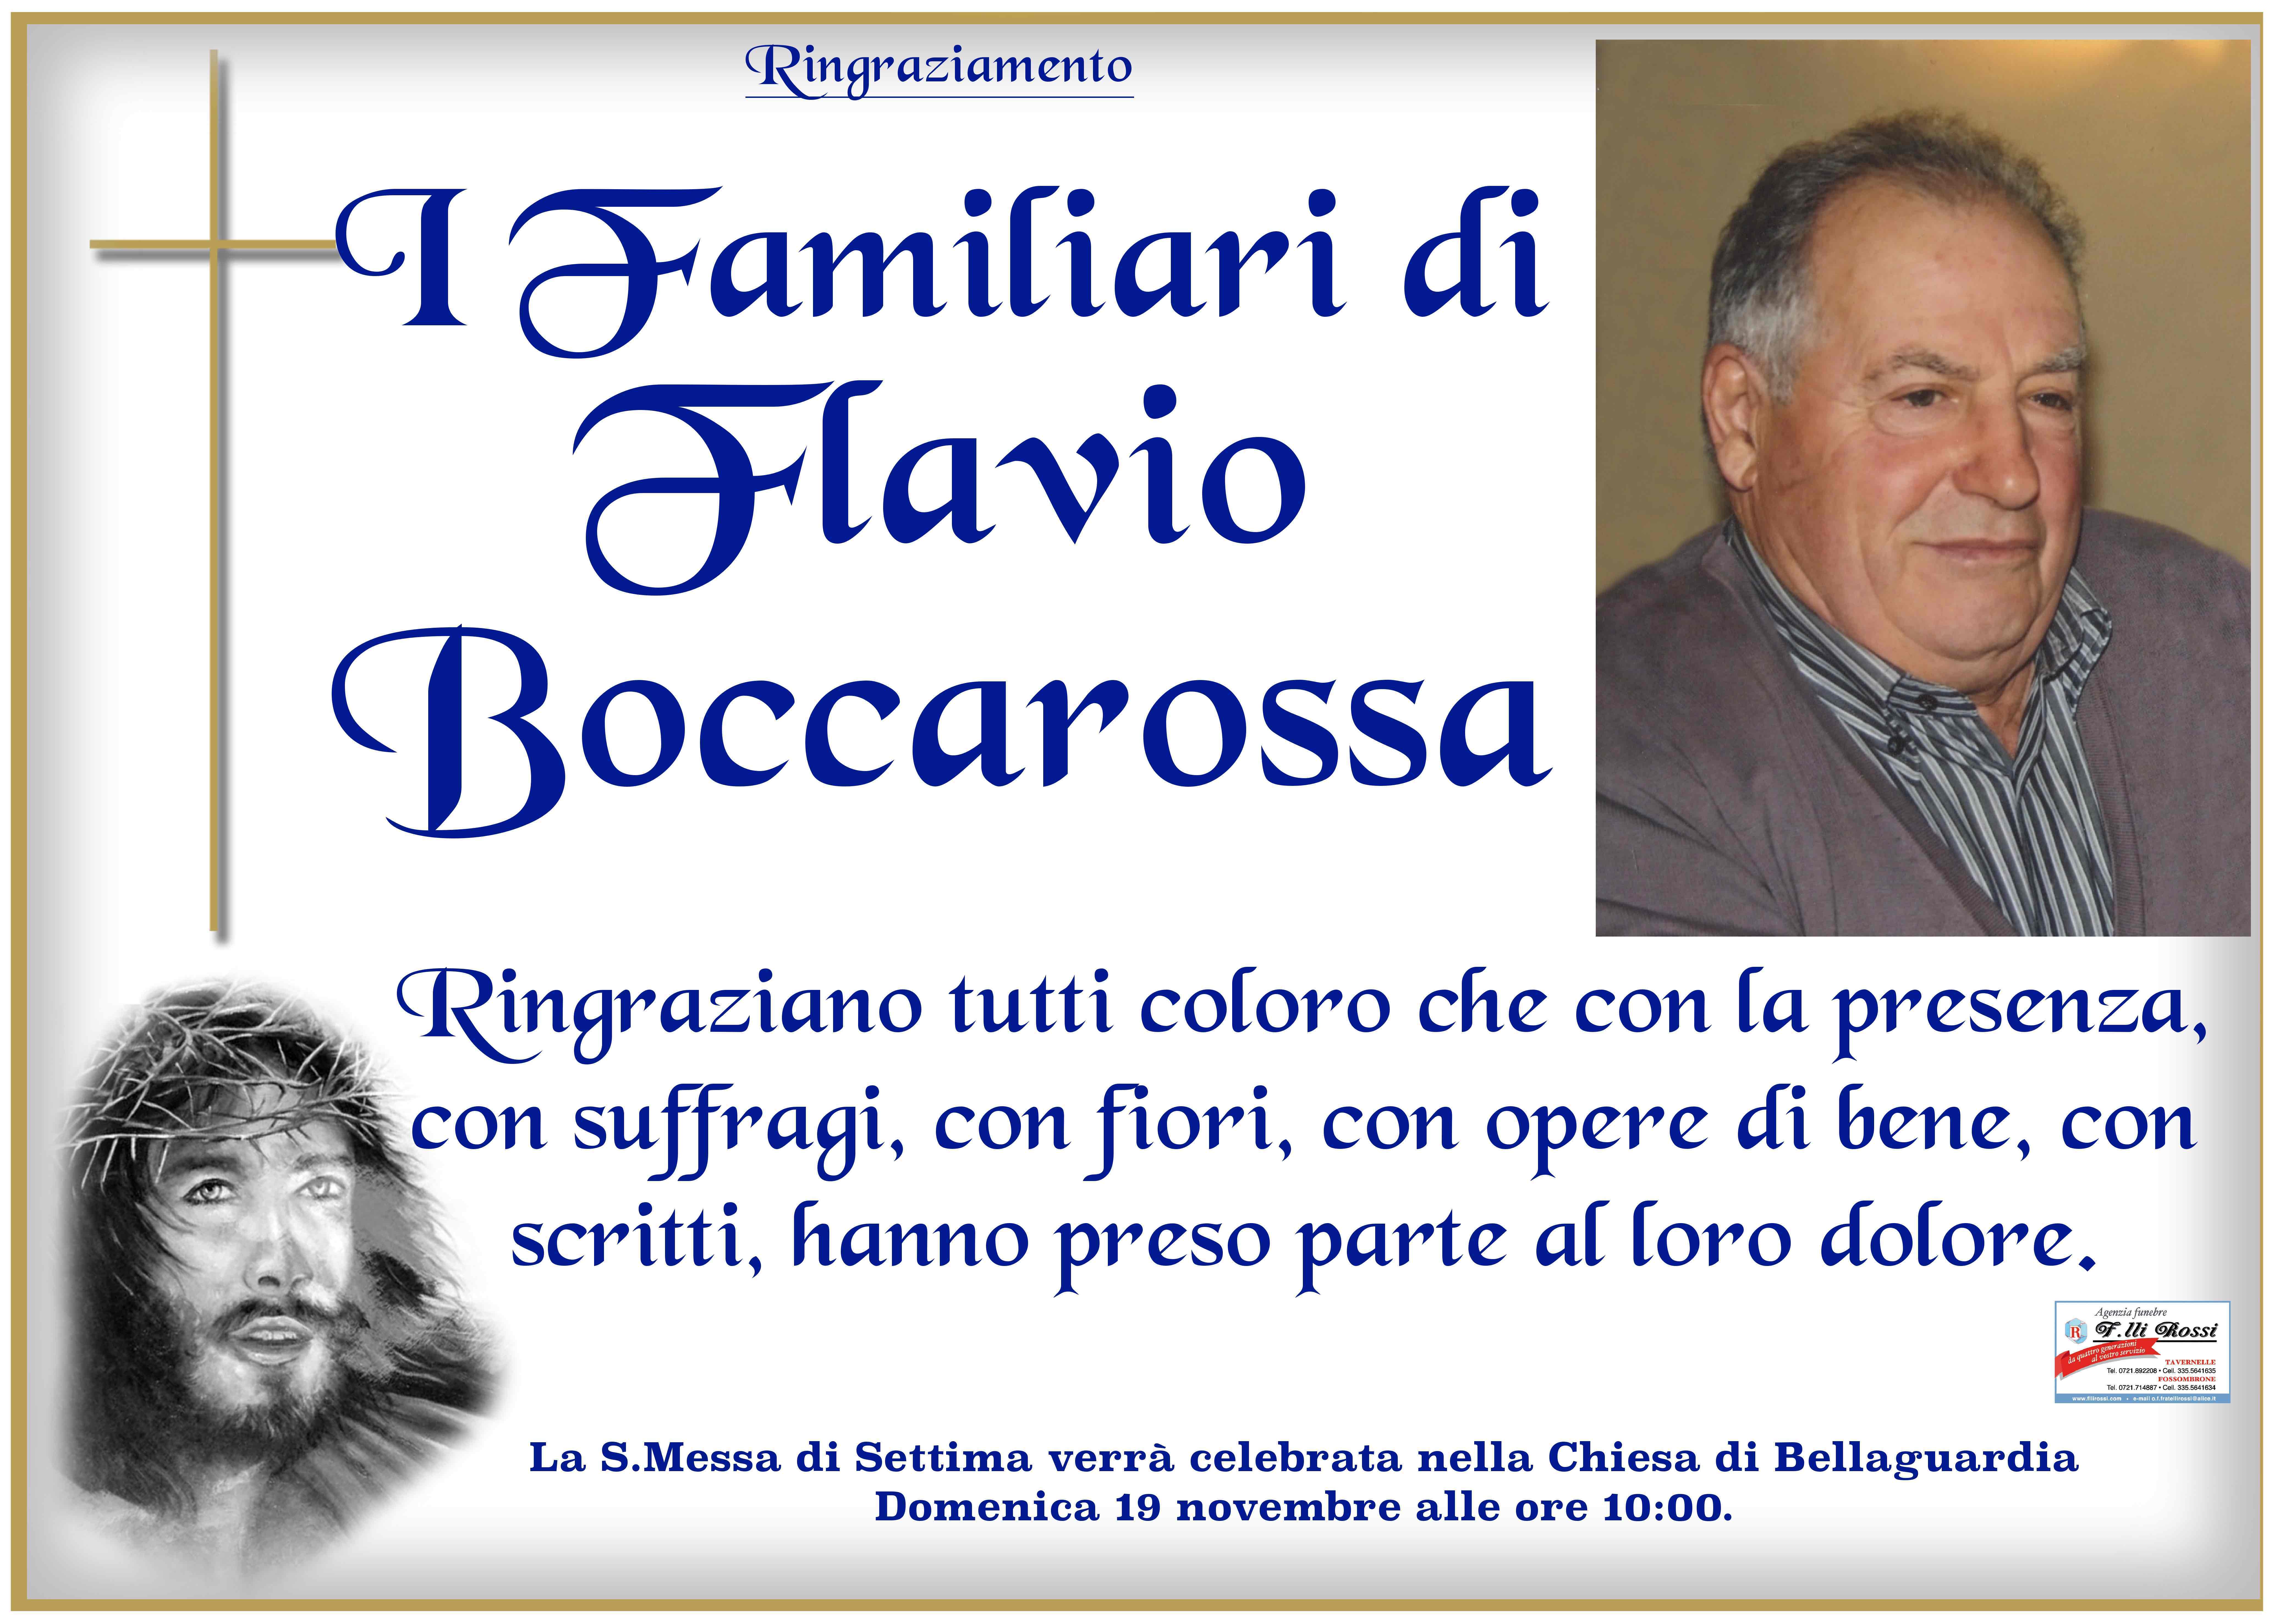 Flavio Boccarossa